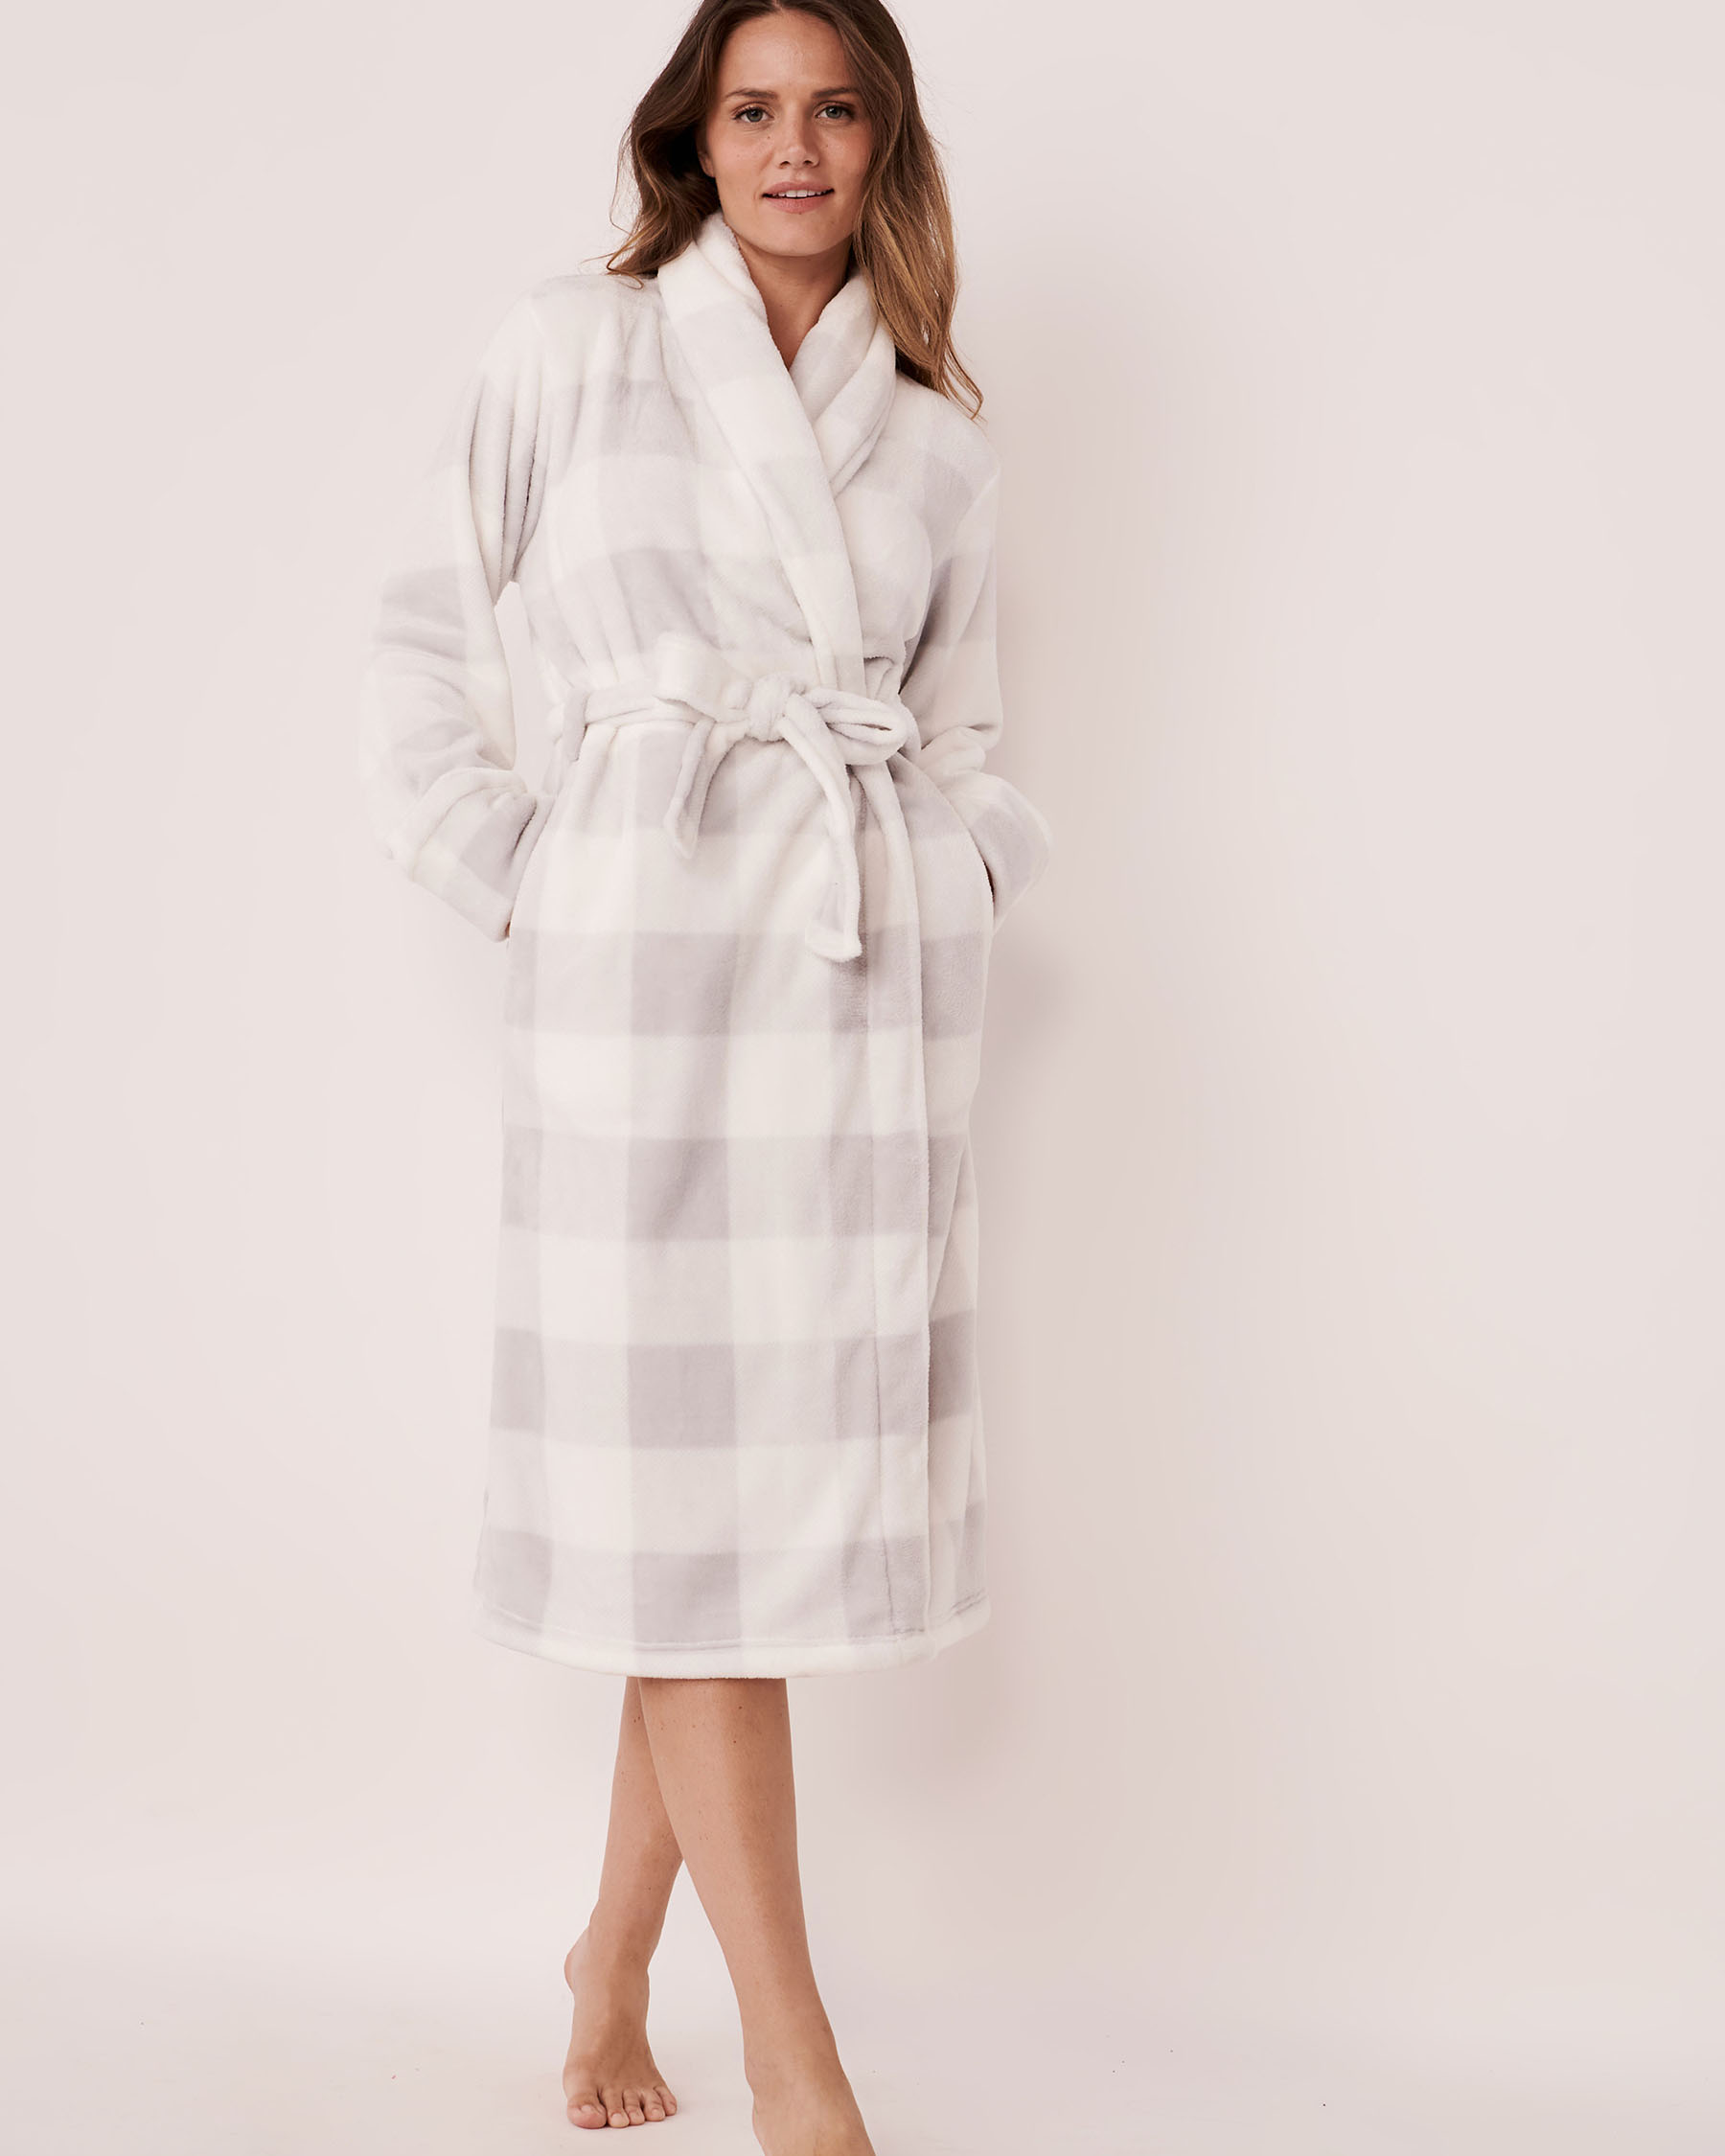 LA VIE EN ROSE Plush Plaid Robe White and grey plaid 40600104 - View1